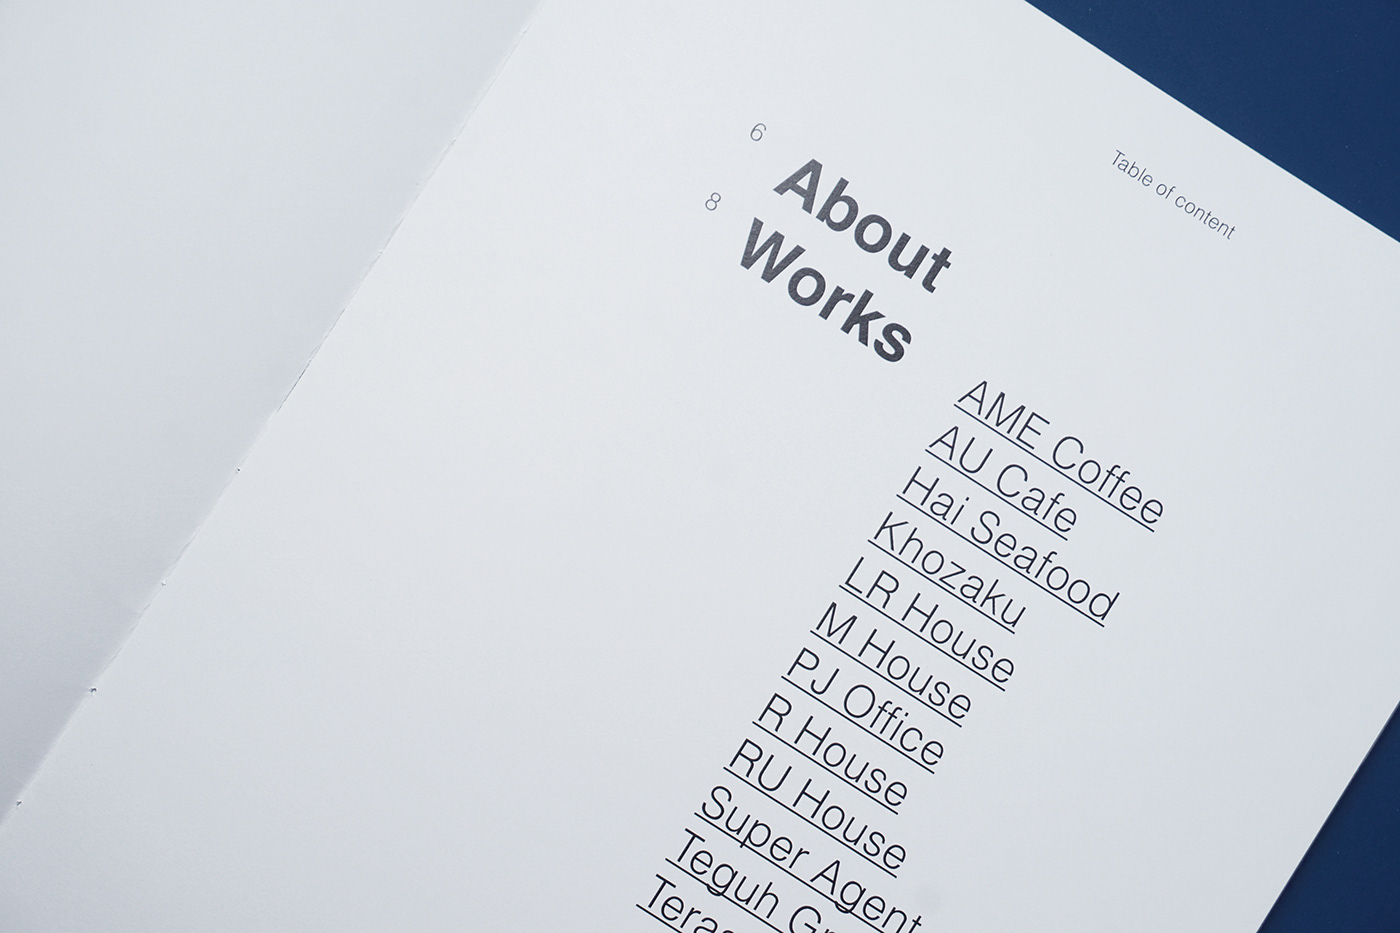 book editorial company profile architecture minimalist Layout prints